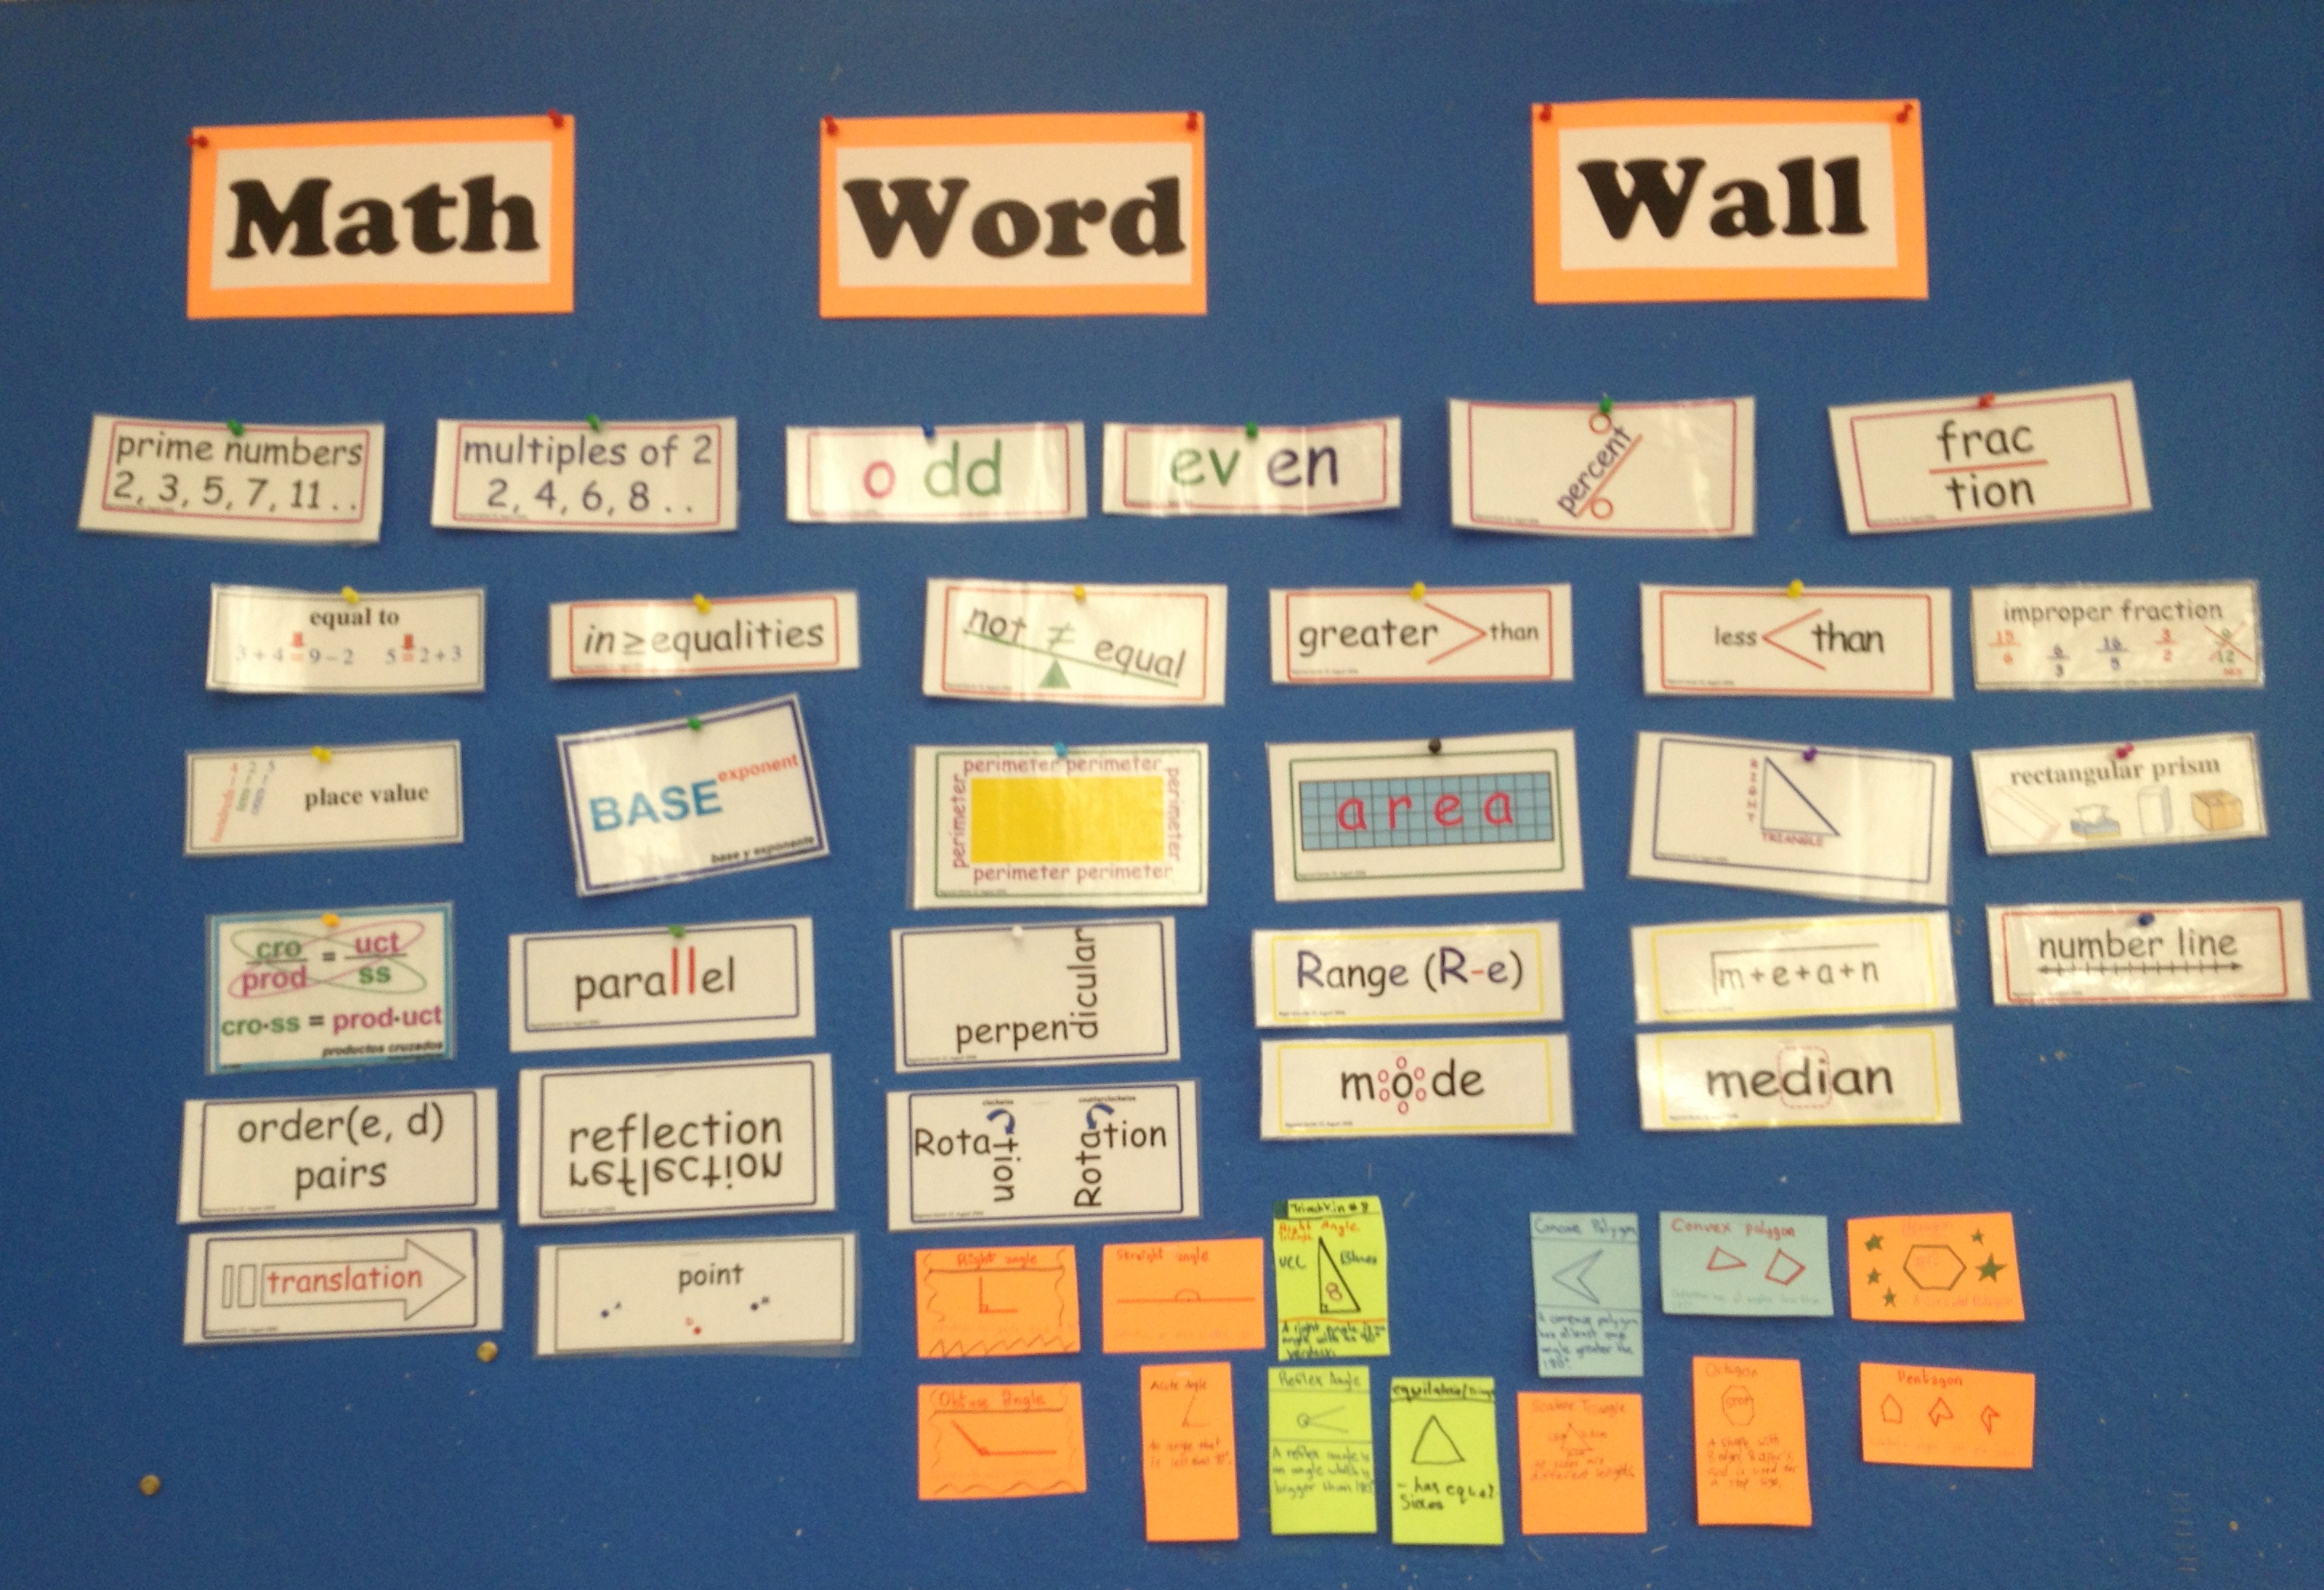 Math Word Wall | Flickr - Photo Sharing!3198 x 2188